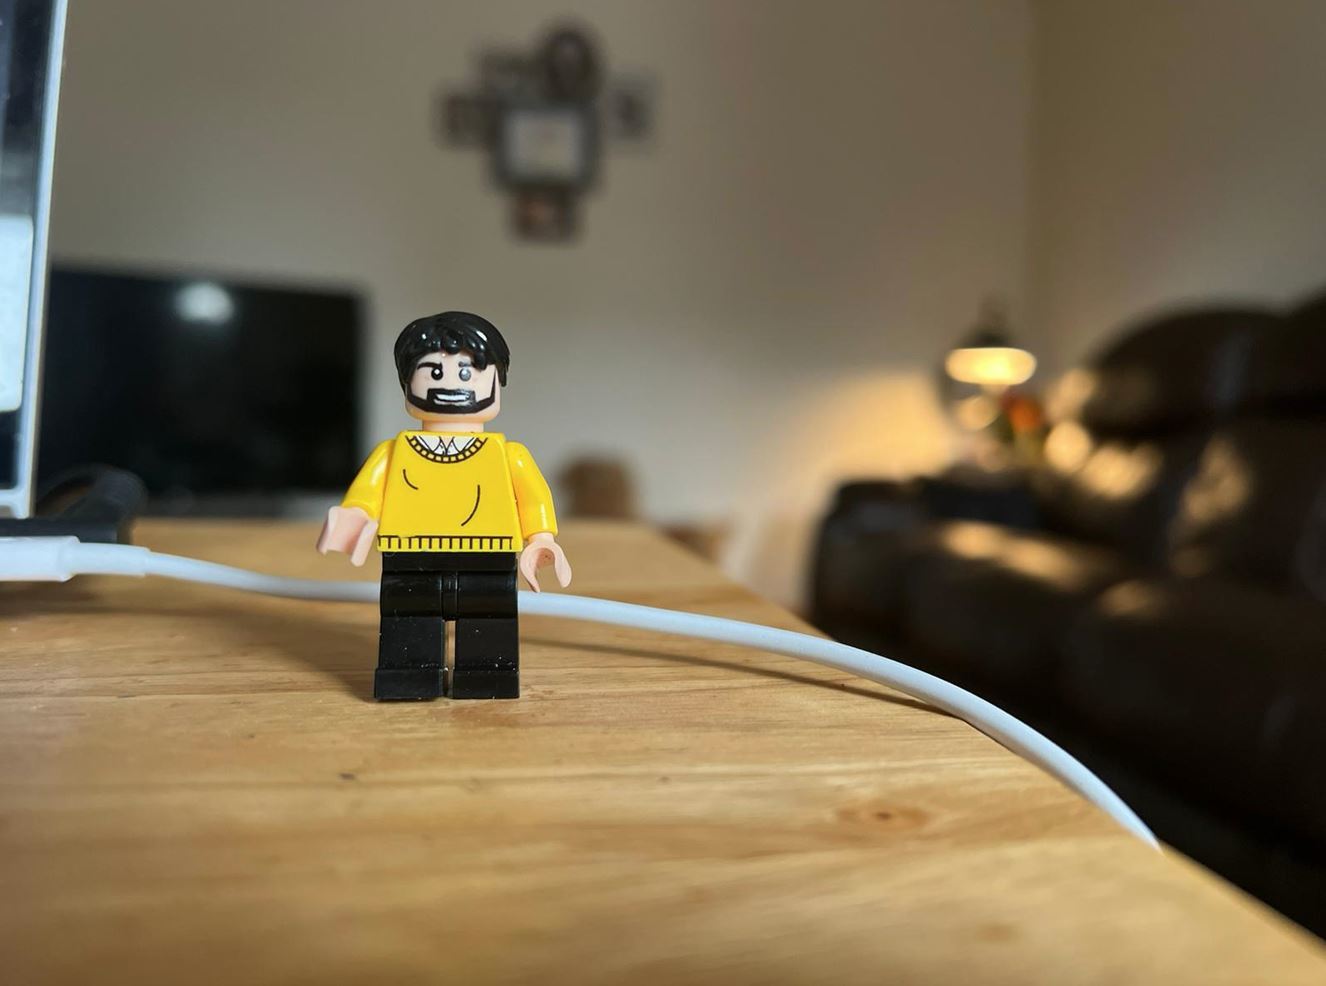 Matts very own Lego model.